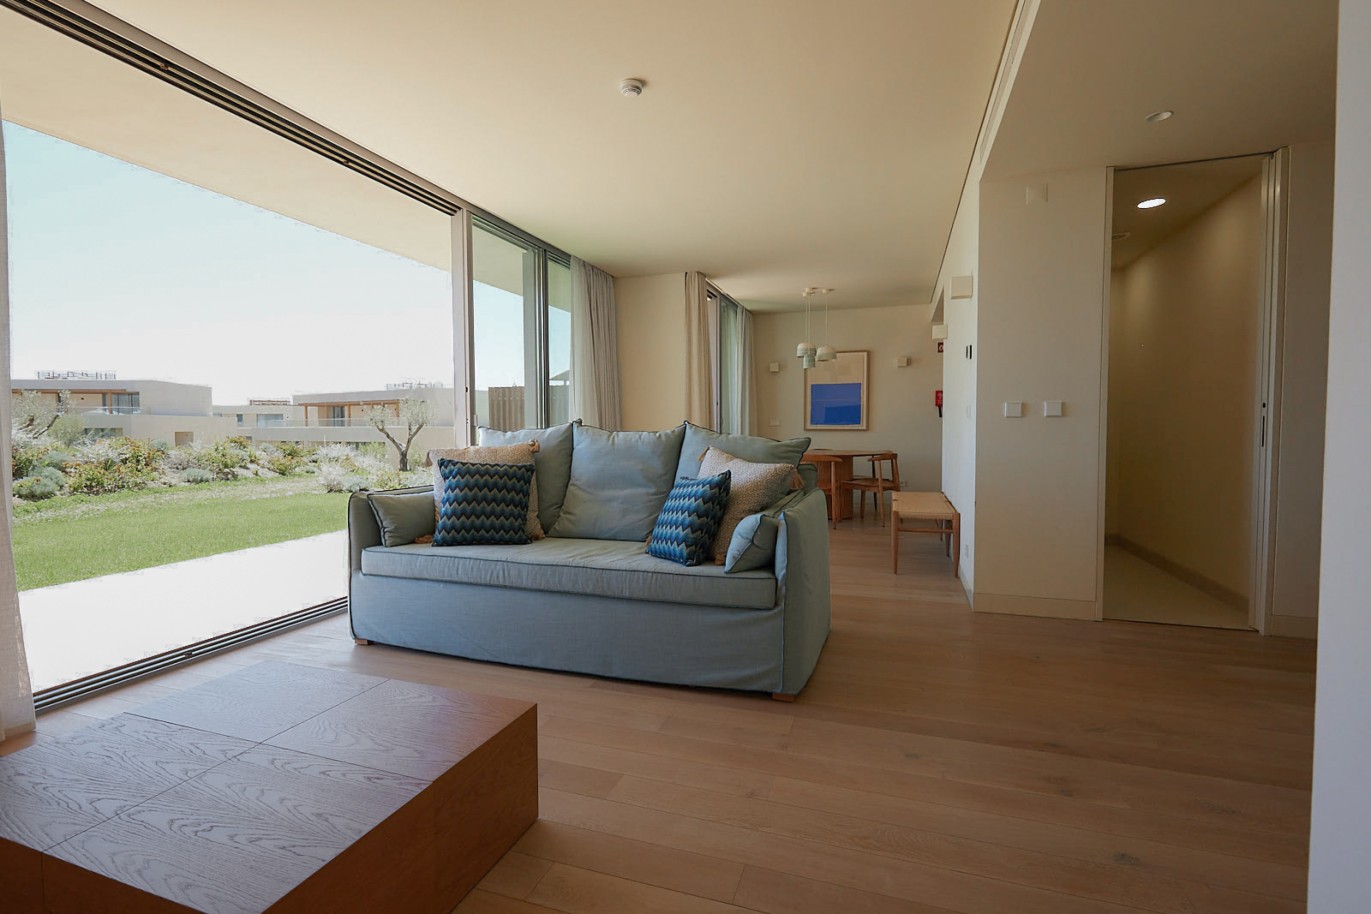 2 bedroom apartment in resort, for sale in Porches, Algarve_229189